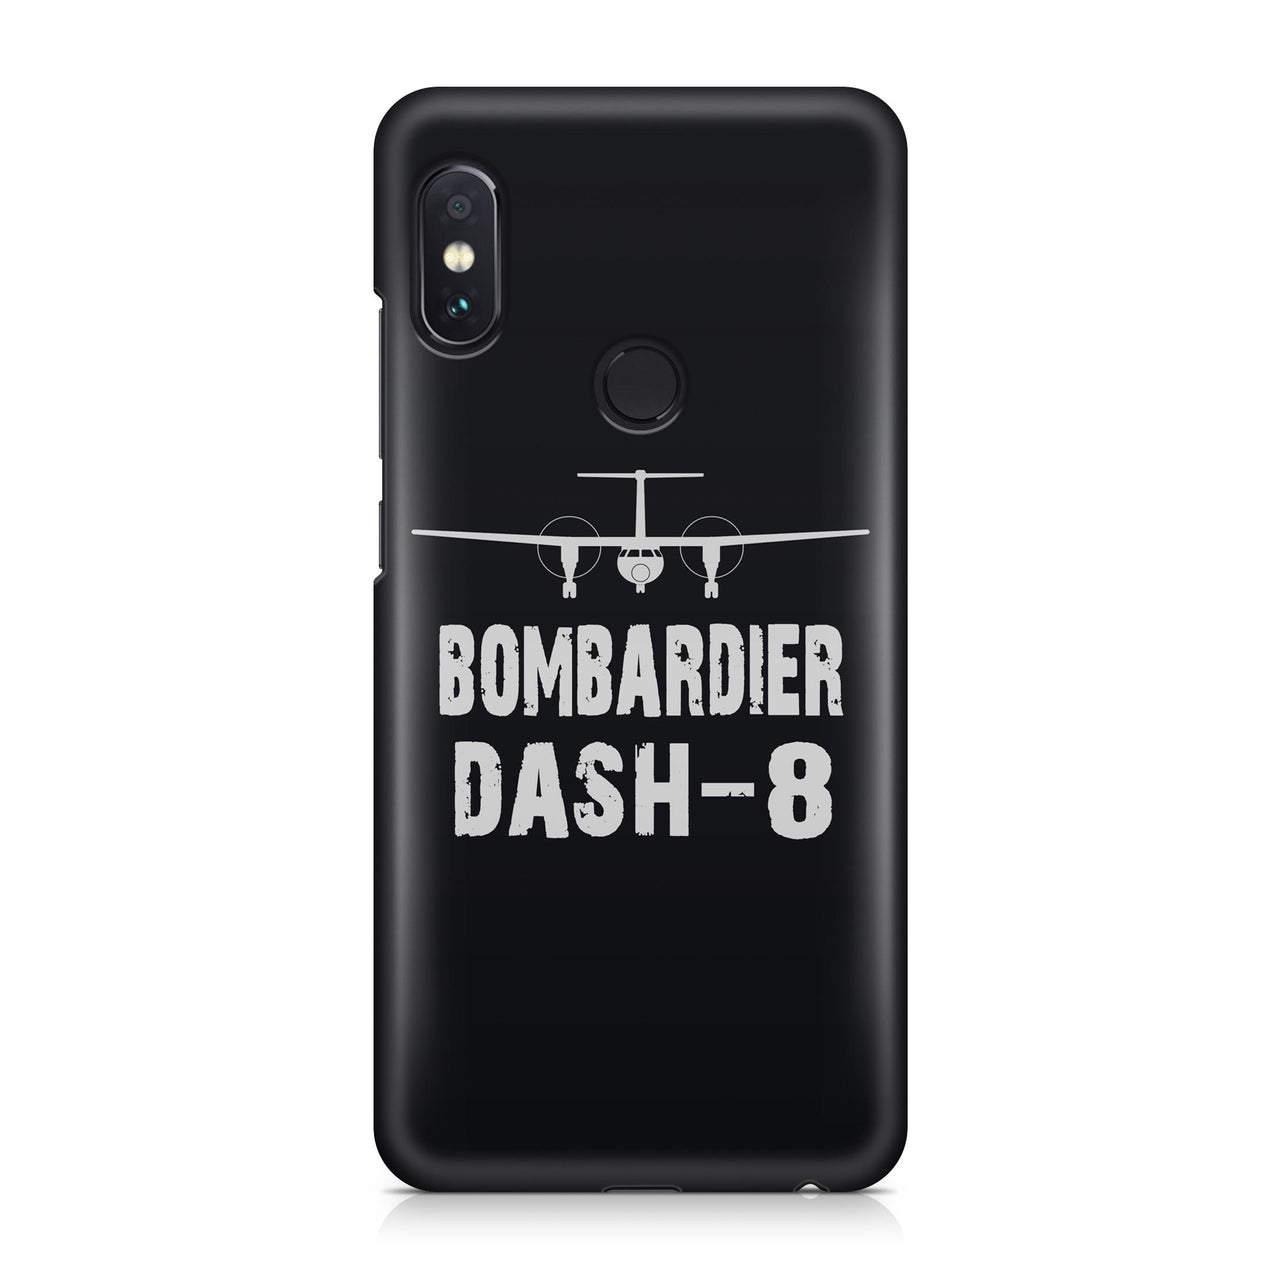 Bombardier Dash-8 Plane & Designed Xiaomi Cases